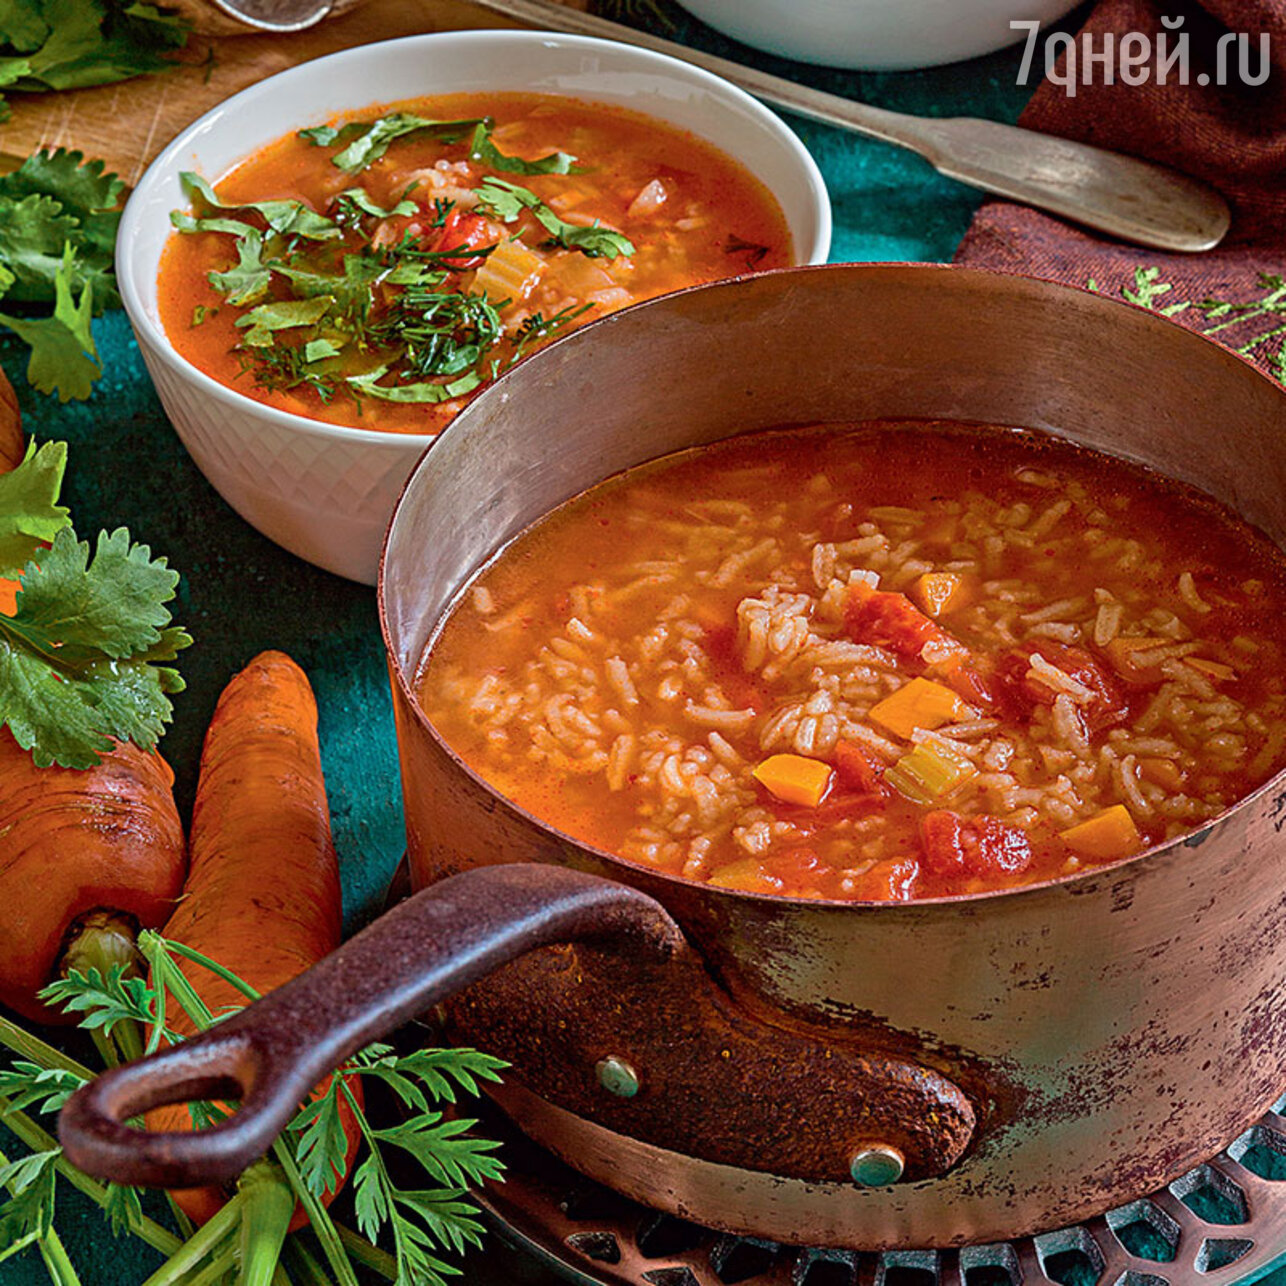 Рецет томатного супа с рисом | Меню недели